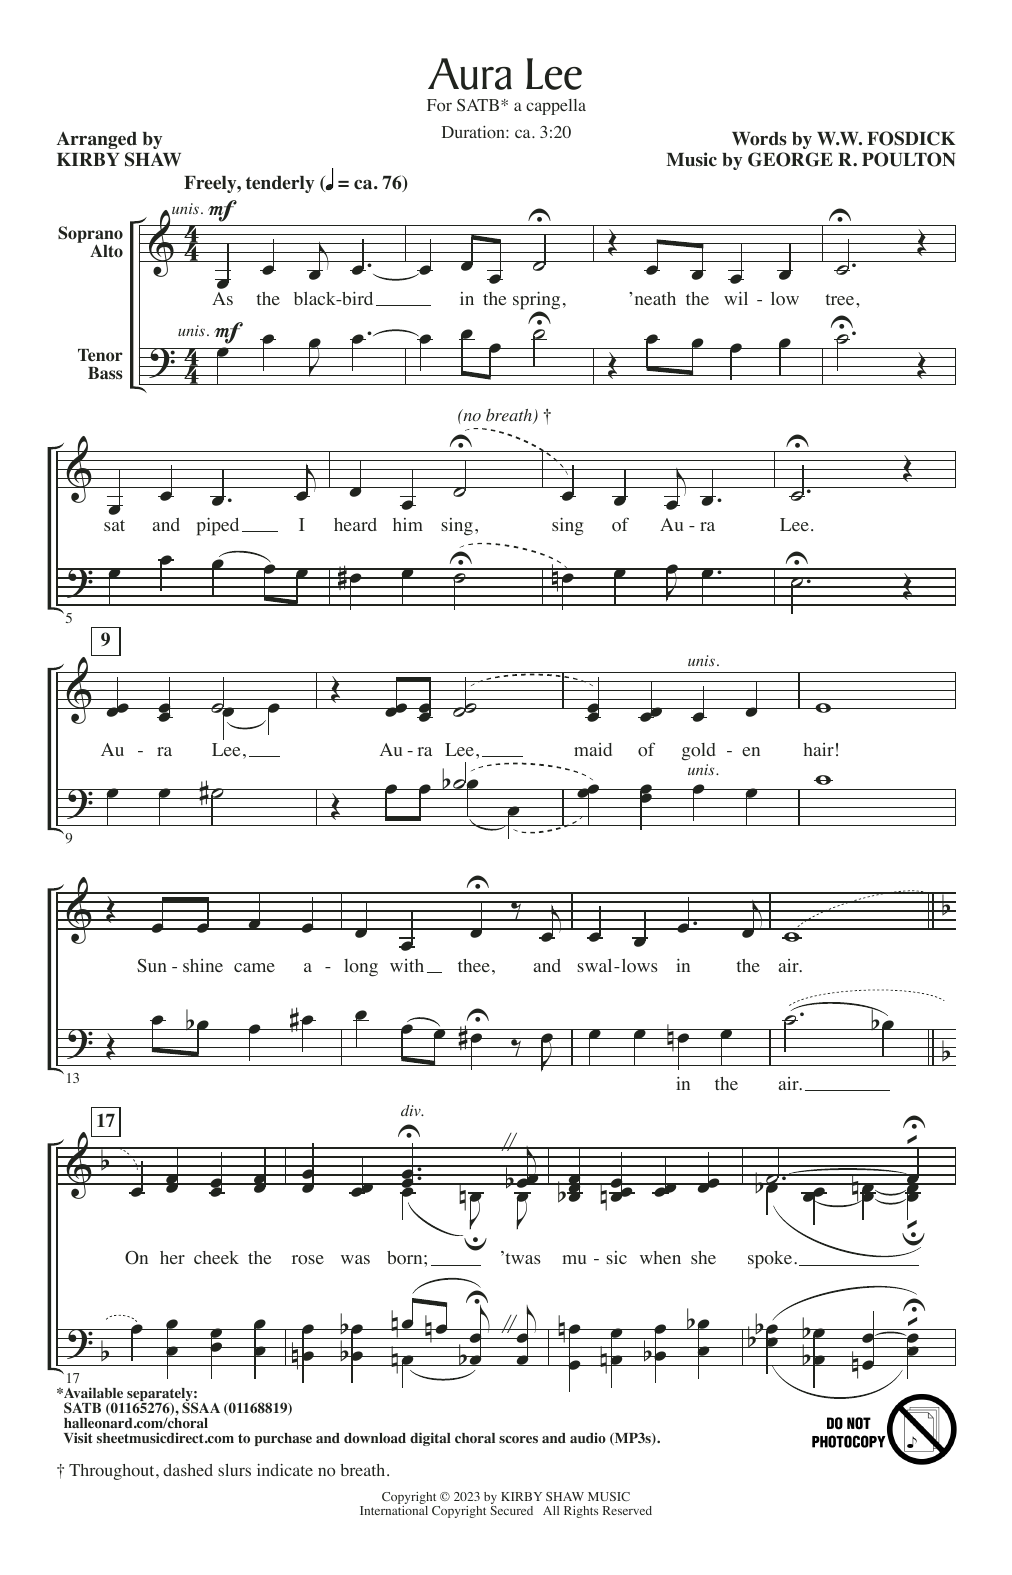 George R. Poulton Aura Lee (arr. Kirby Shaw) Sheet Music Notes & Chords for SATB Choir - Download or Print PDF